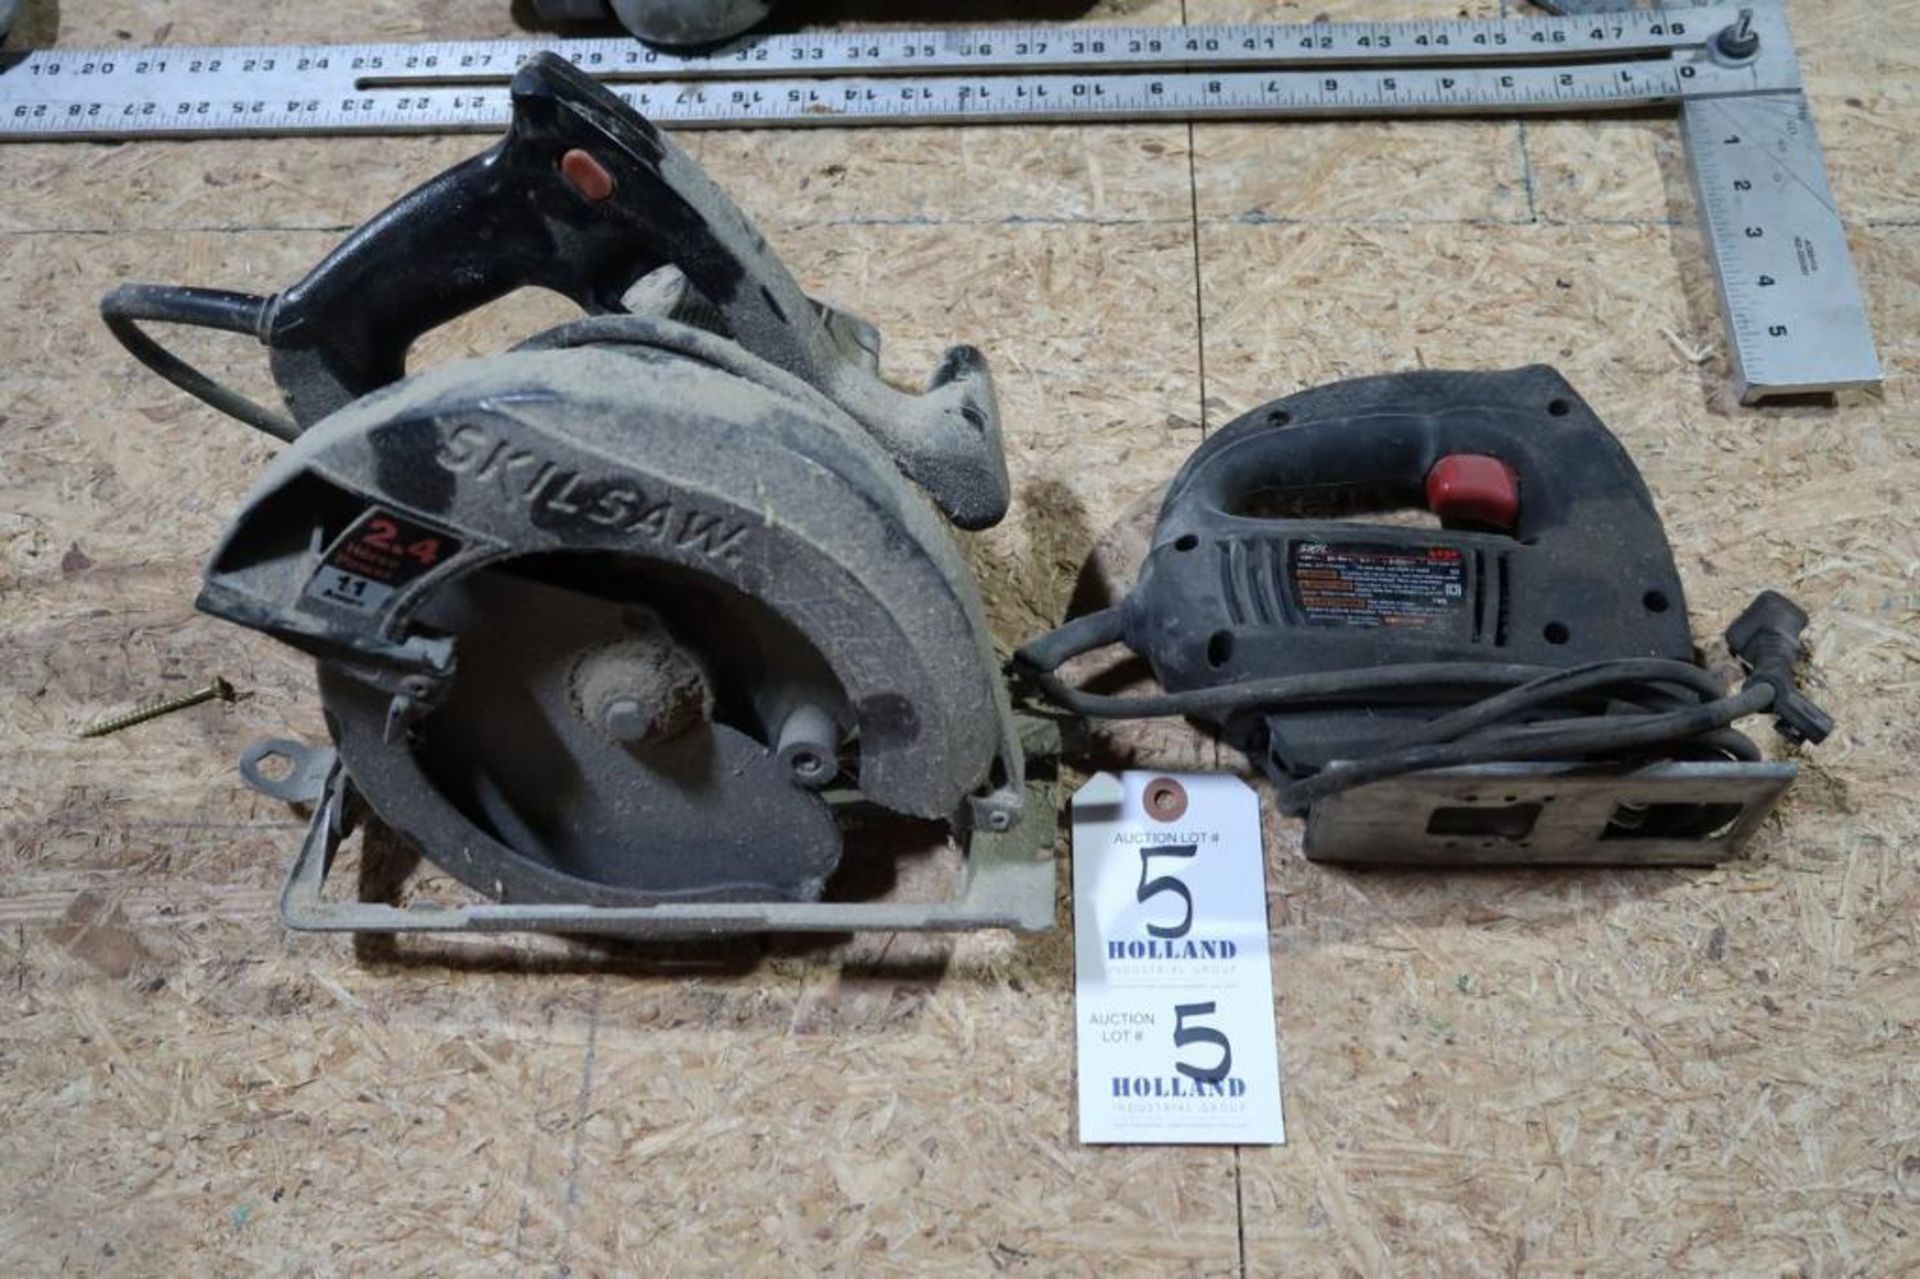 (2) Skilsaw Electric Saws: (1) Model 5155 7-1/4" Circular Saw, (1) Model 3230 Jig Saw